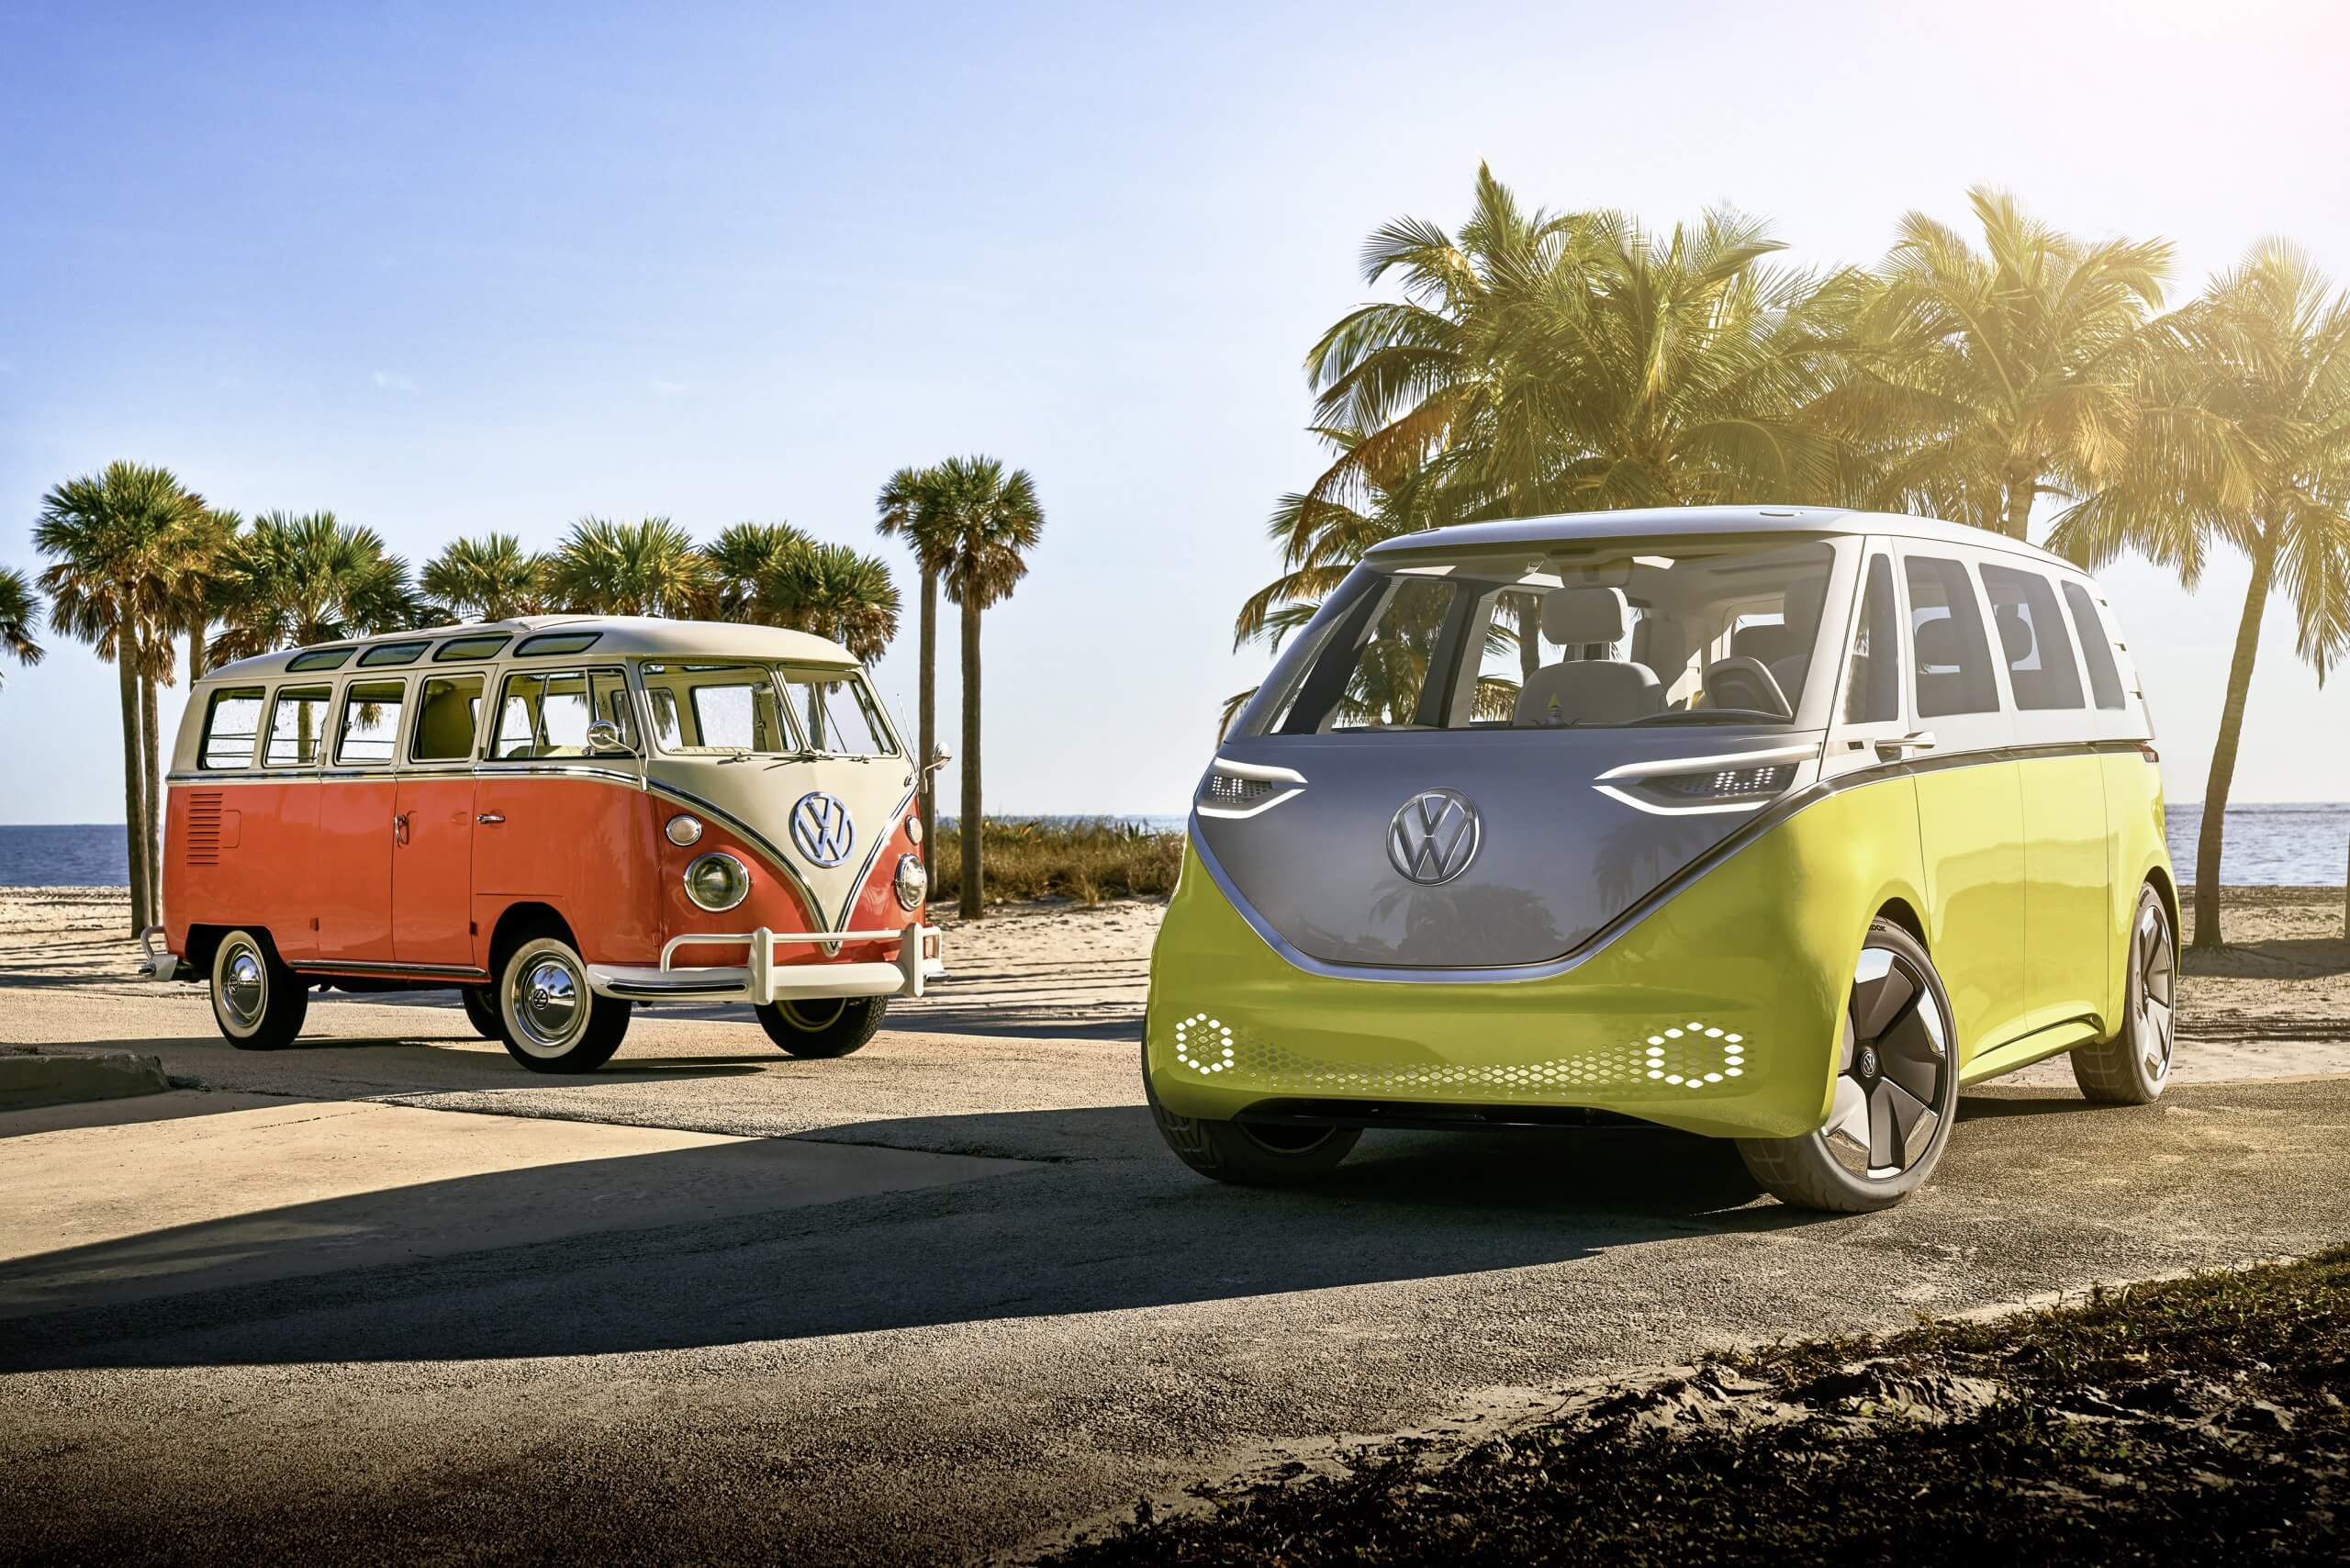 Volkswagen elektrikli araçlar konusunda iddialı